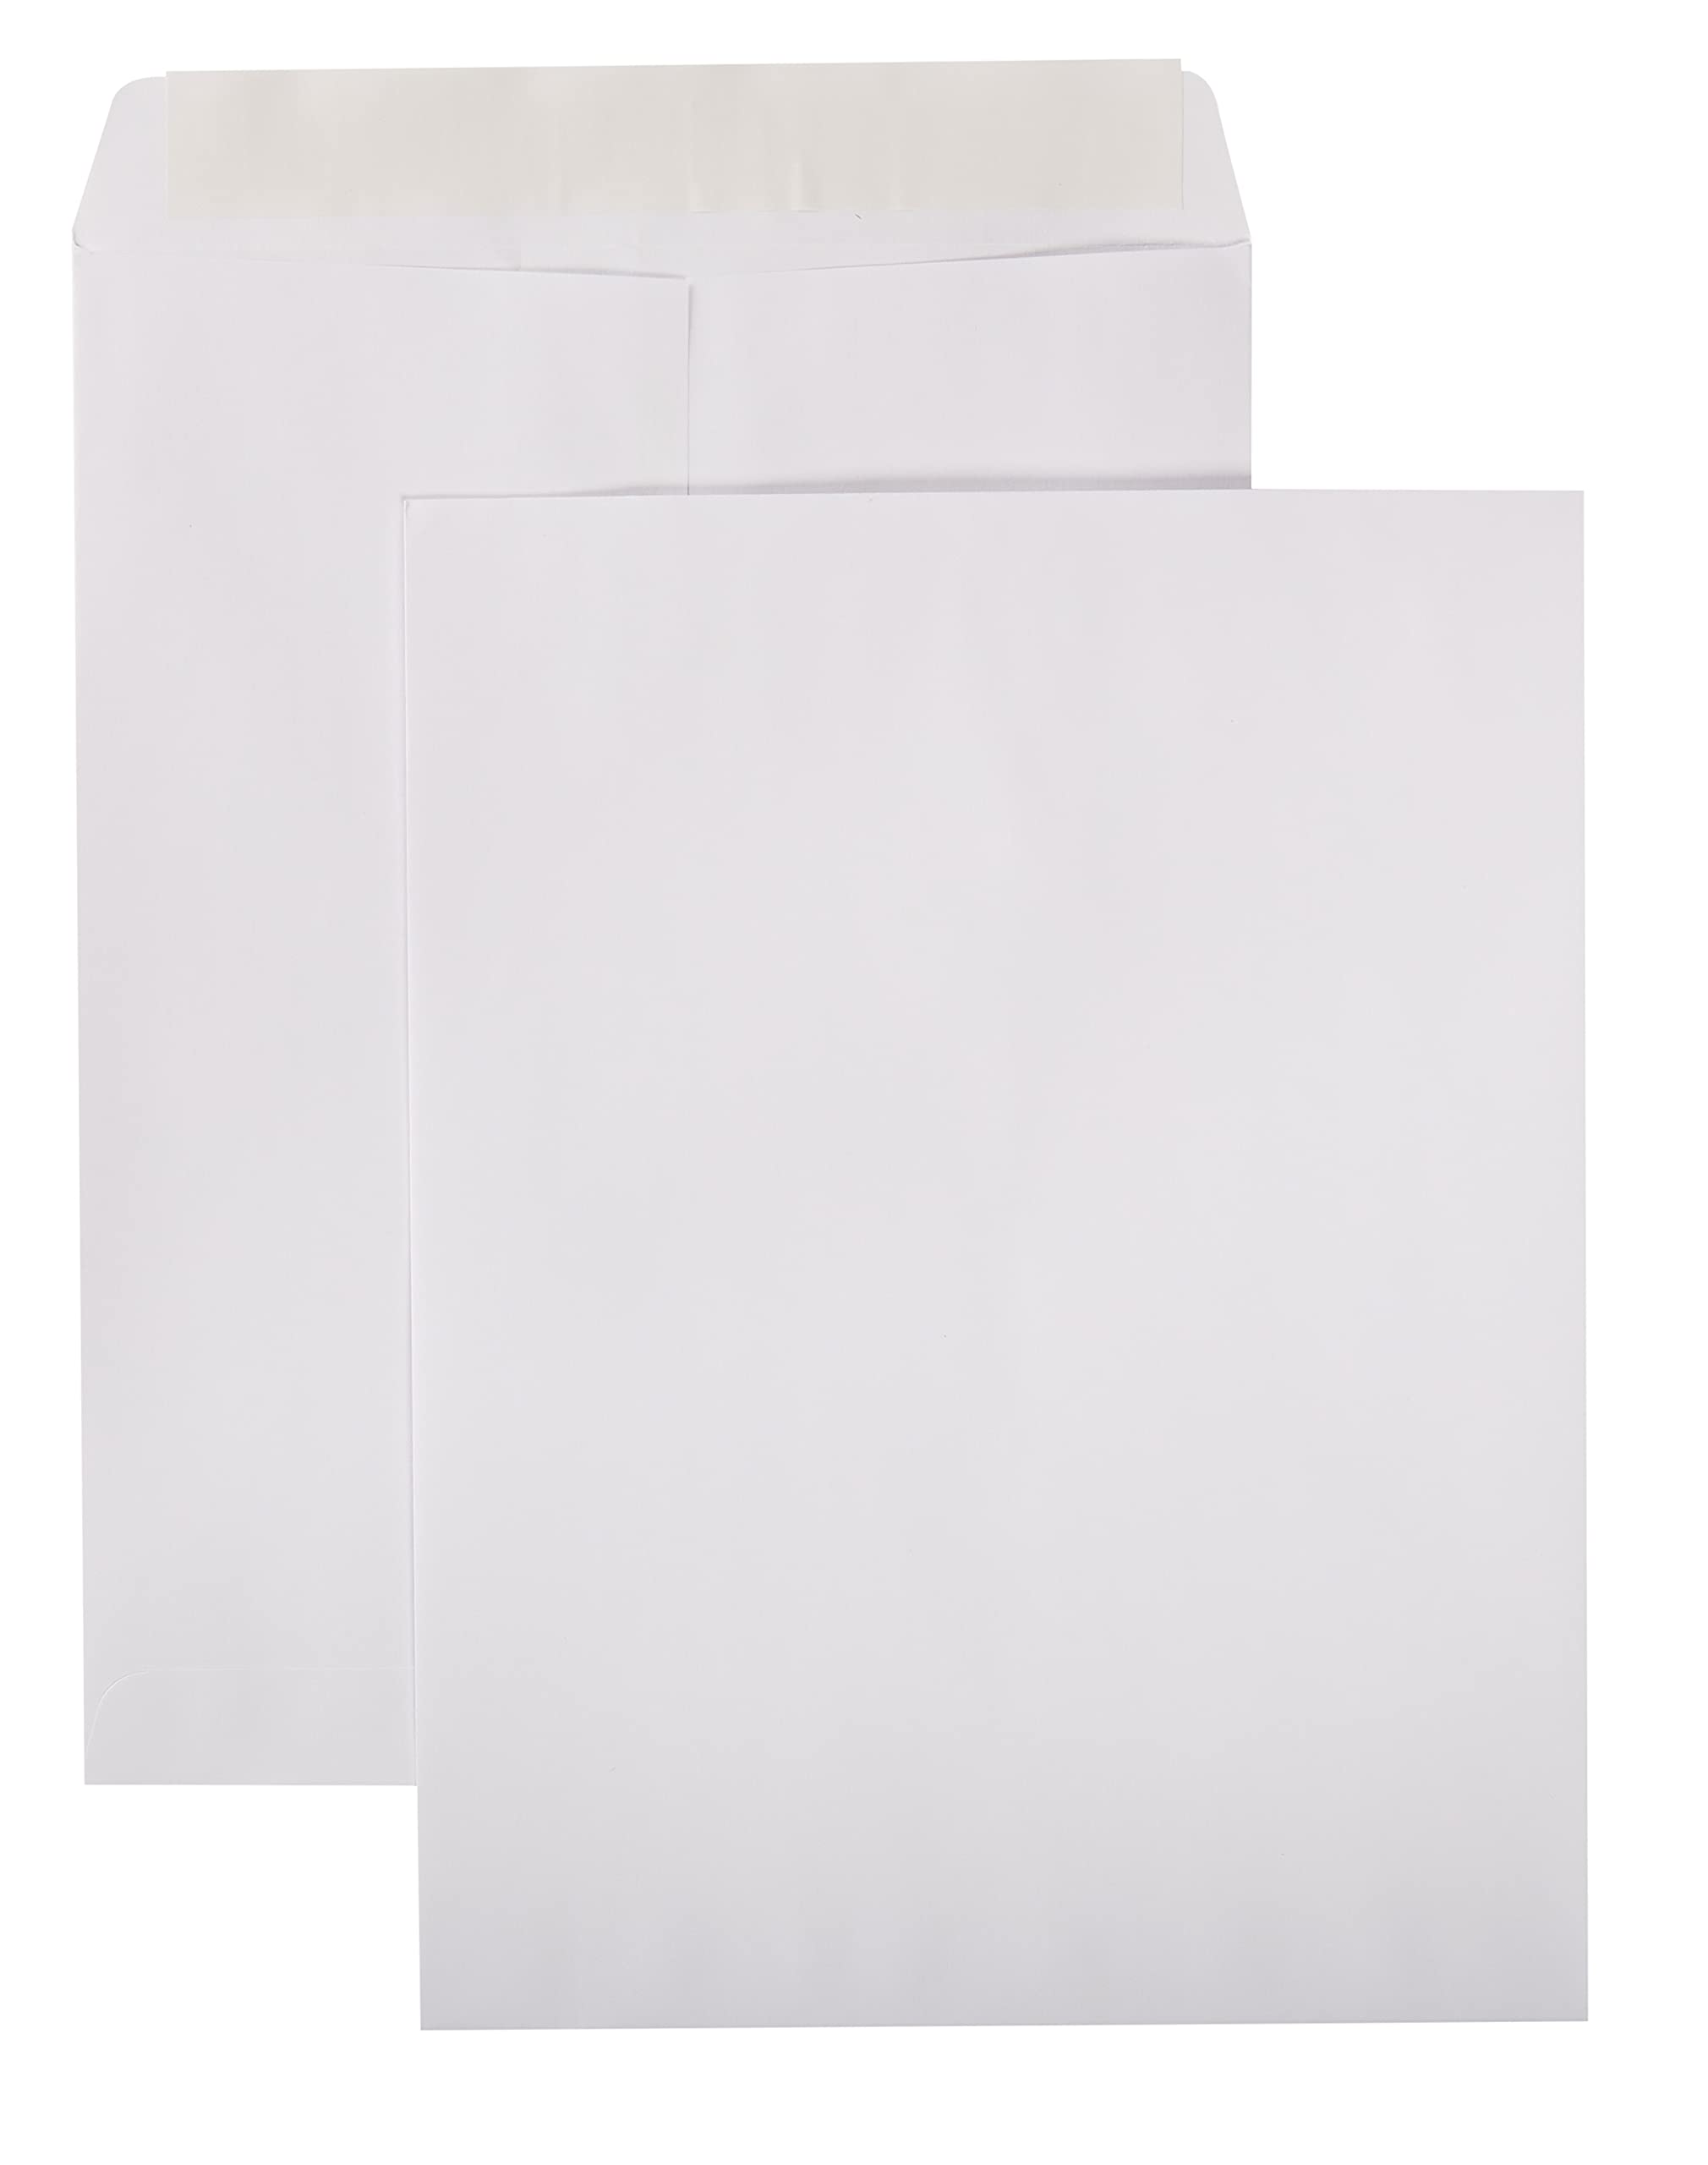 Book Cover Amazon Basics Catalog Mailing Envelopes, Peel & Seal, 10x13 Inch, White, 100-Pack 100-Pack 10 x 13 Envelopes